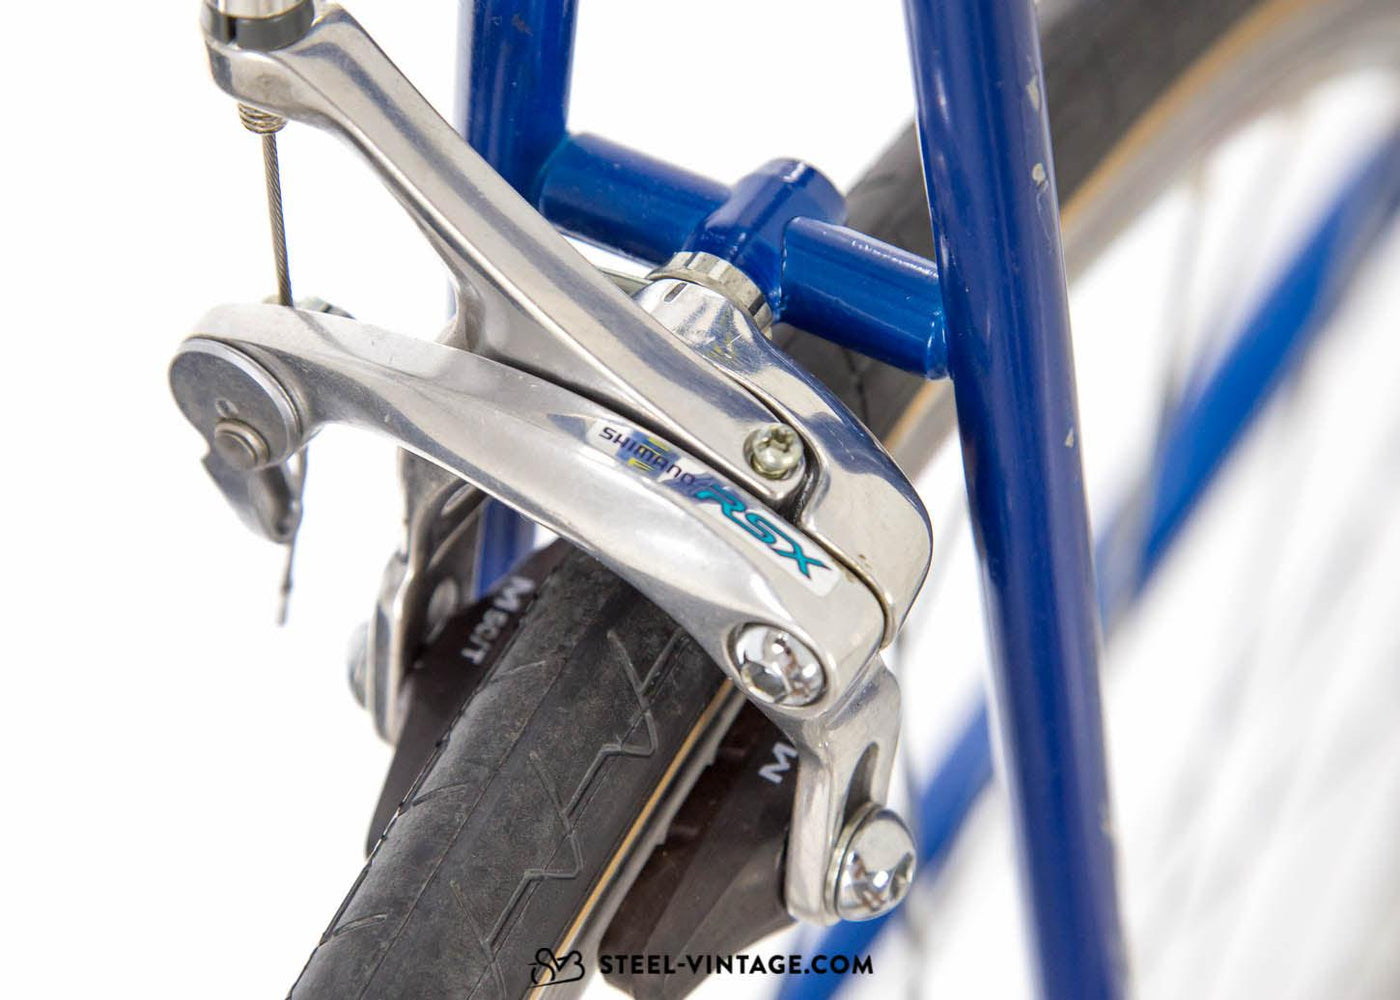 Peugeot Richard Virenque 5000 Road Bike 1990s - Steel Vintage Bikes